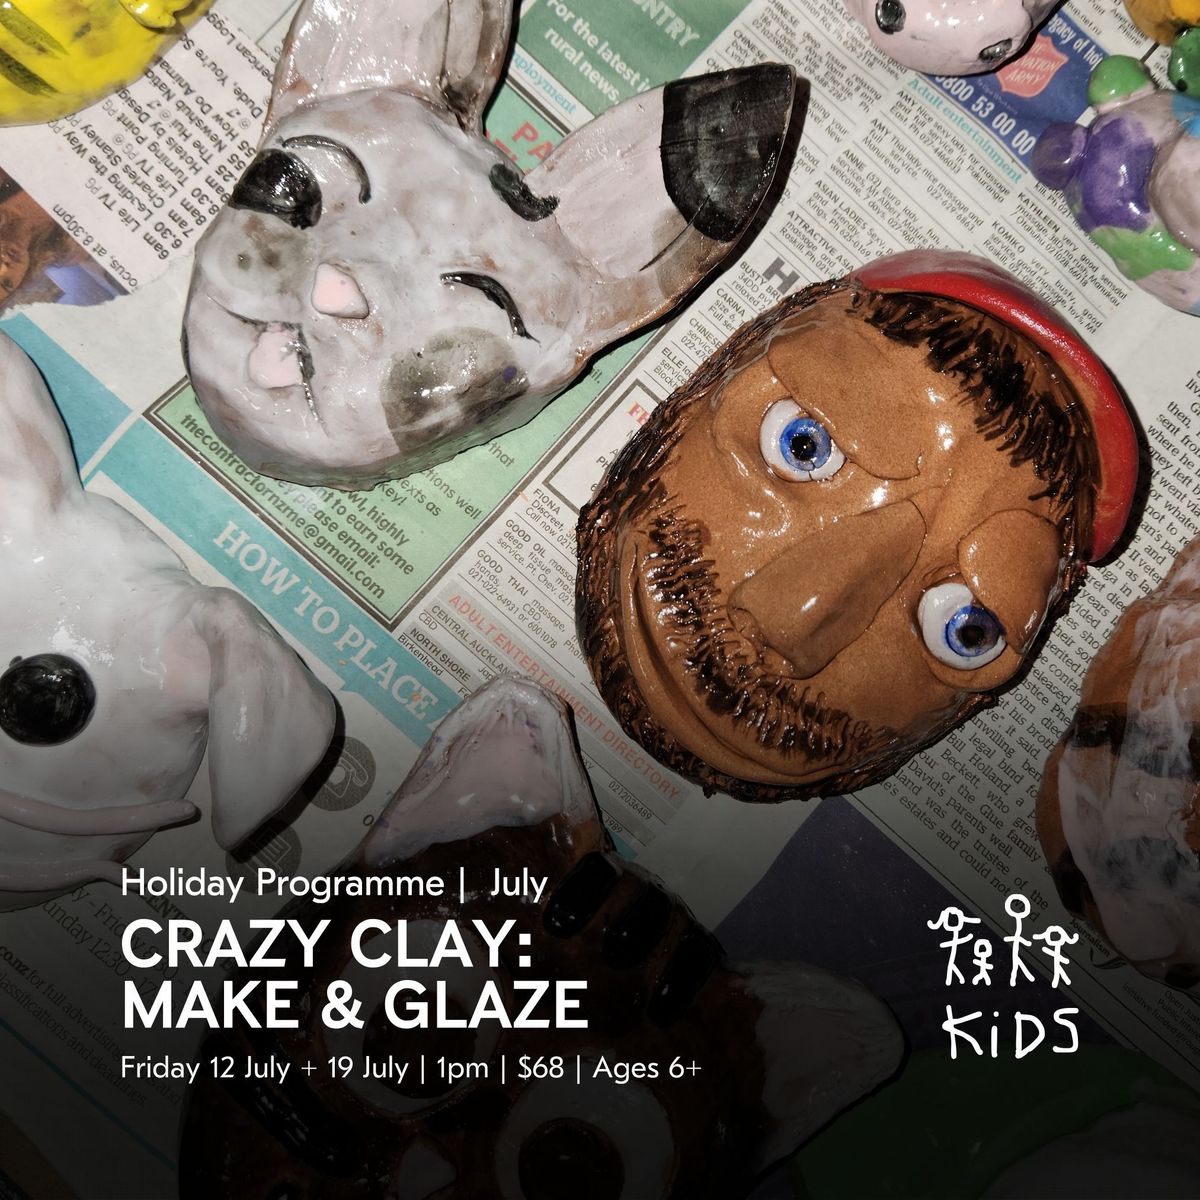 CRAZY CLAY: MAKE & GLAZE | Holiday Programme @ UXBRIDGE